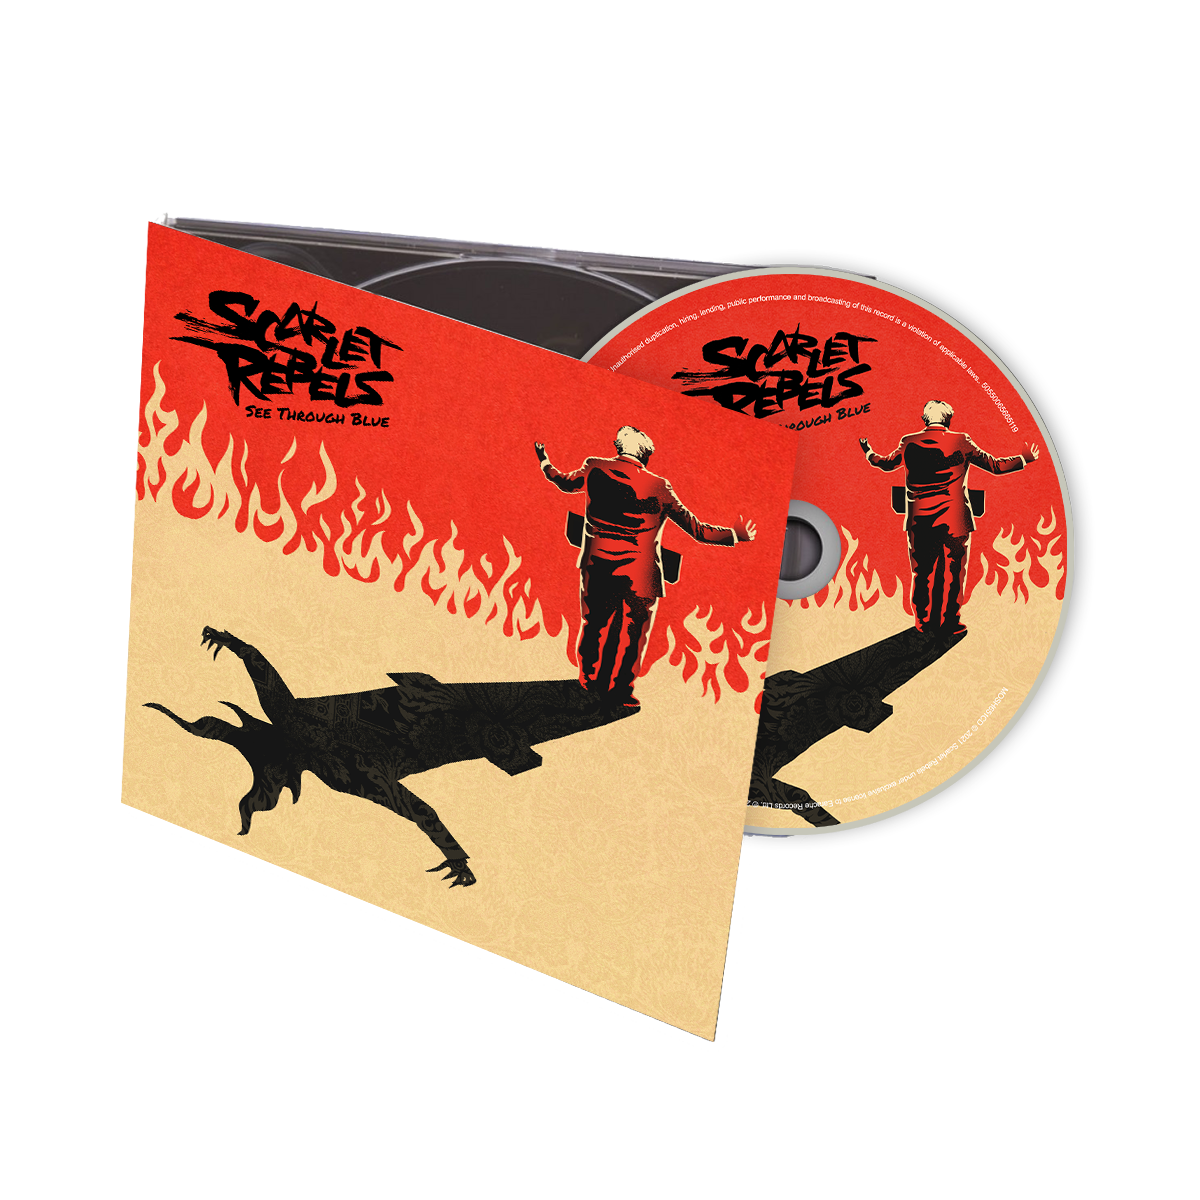 Scarlet Rebels "See Through Blue" Digipak CD